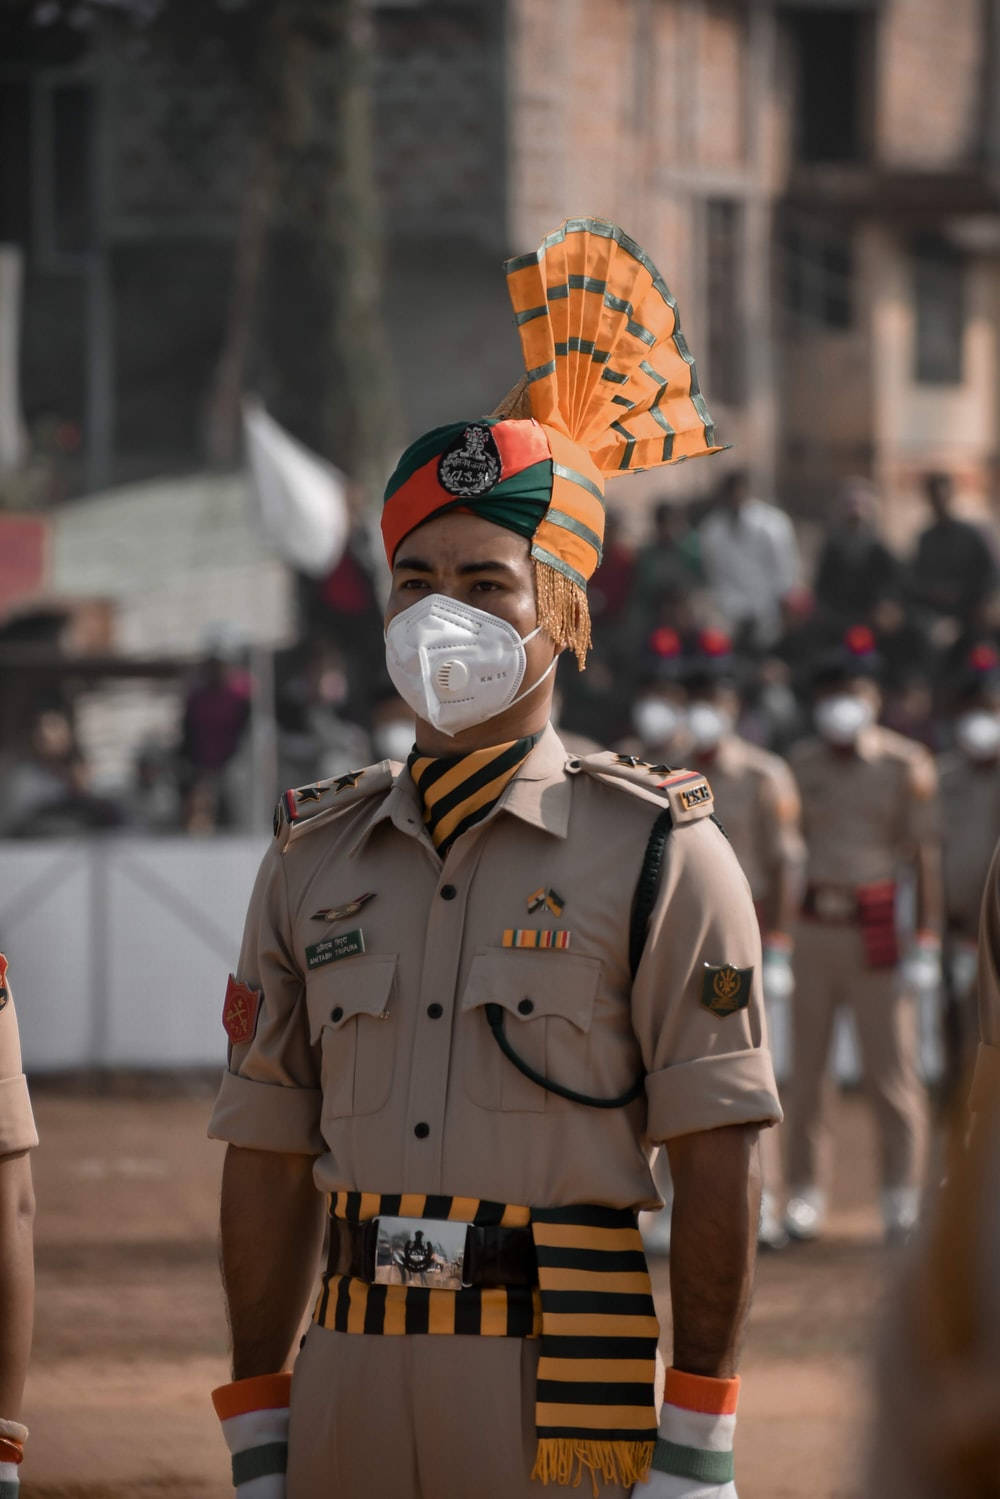 Pride In Duty - Indian Police Force In Uniform